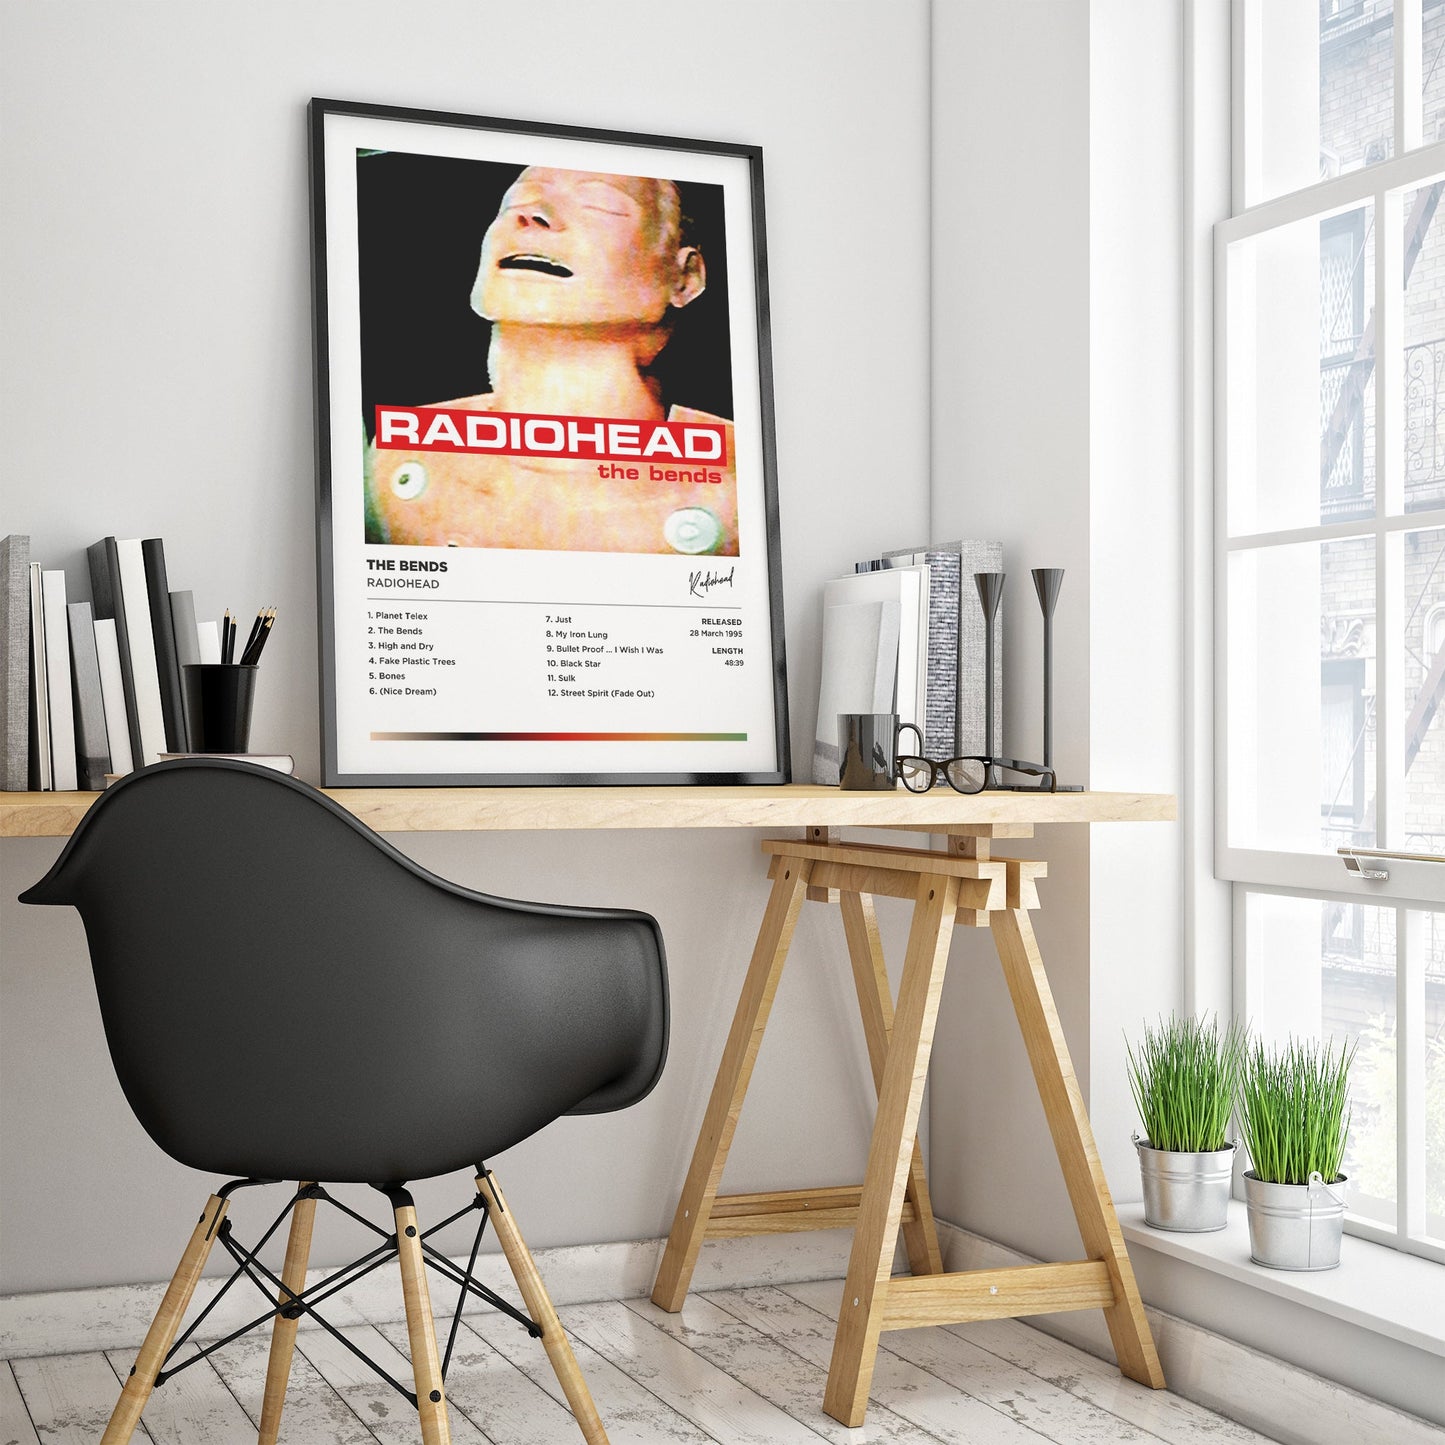 Radiohead - The Bends Framed Poster Print | Polaroid Style | Album Cover Artwork